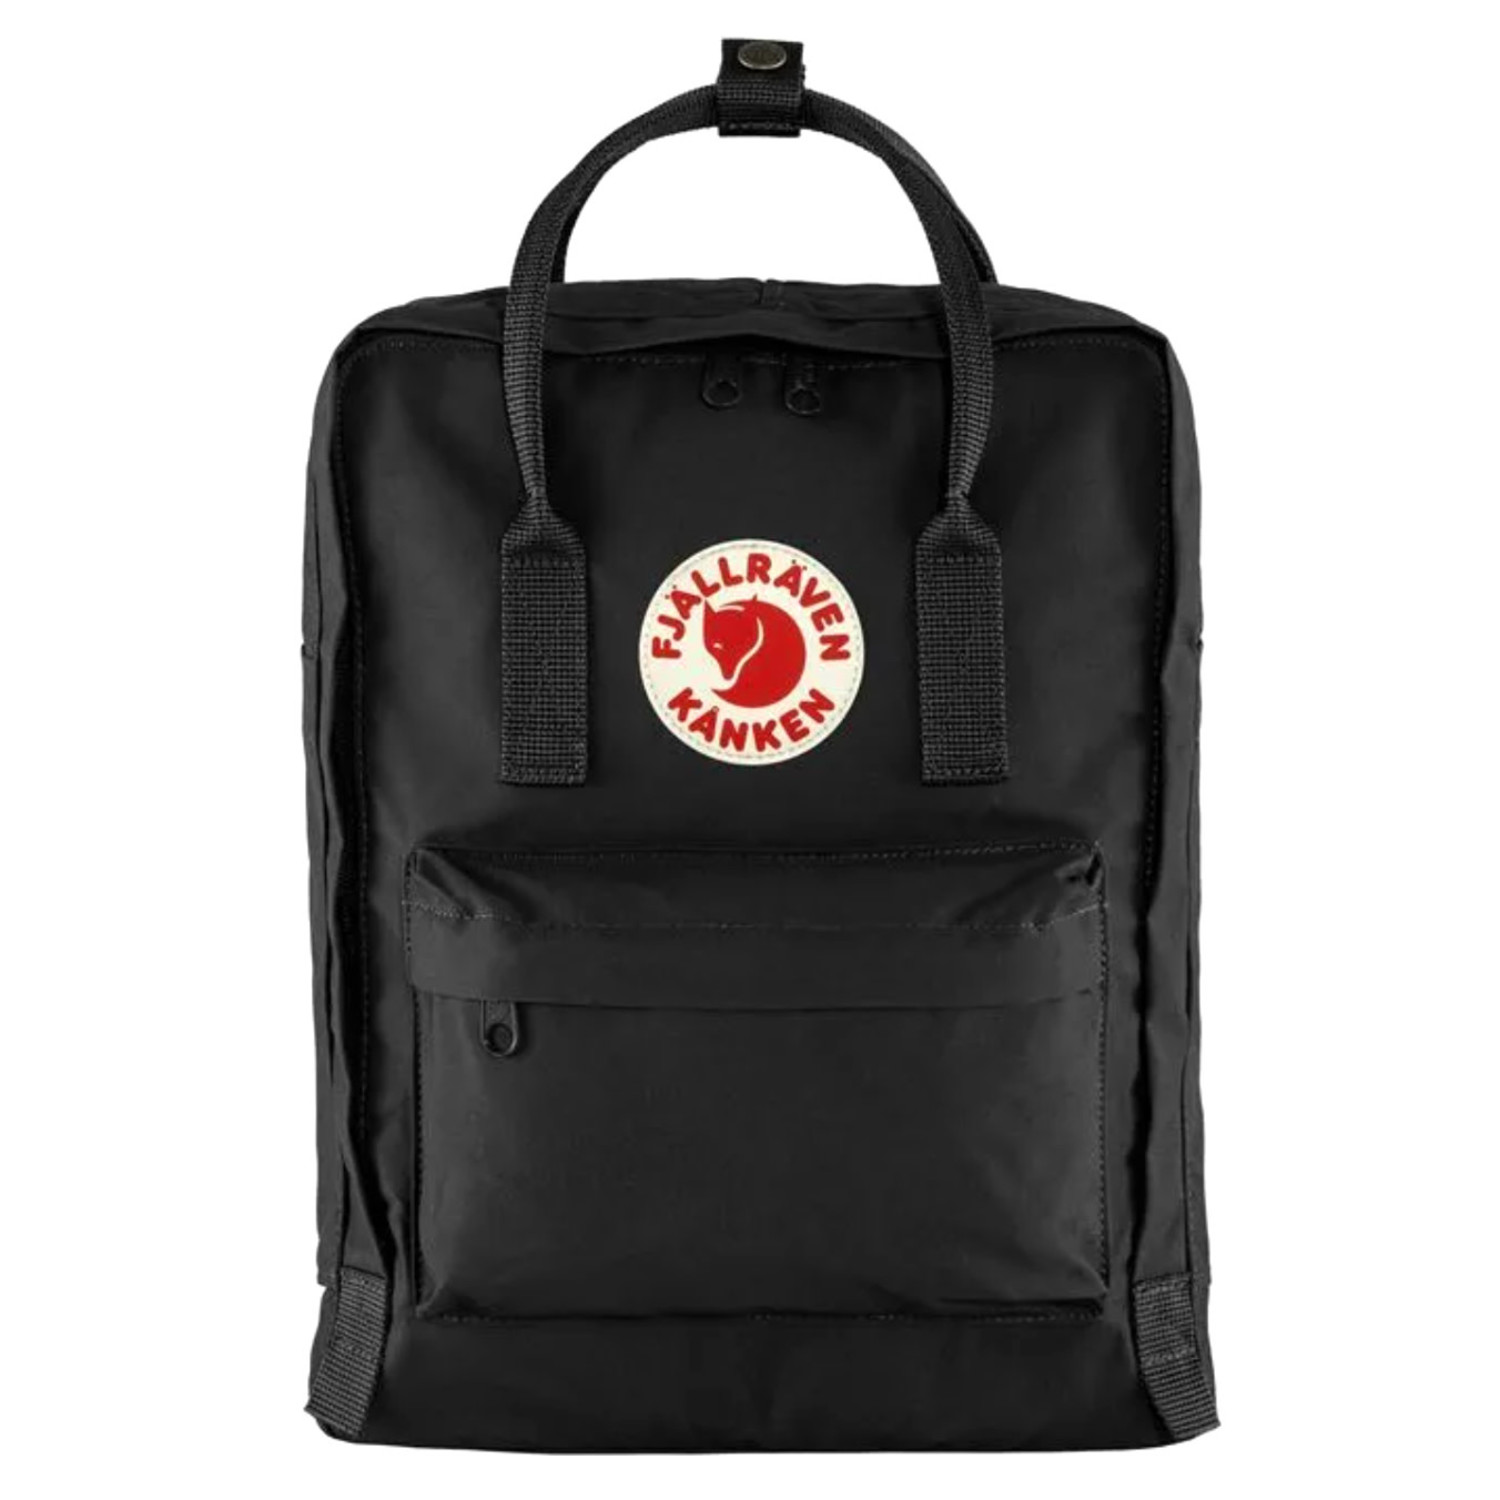 Kanken Backpack Black - Lucky nyc